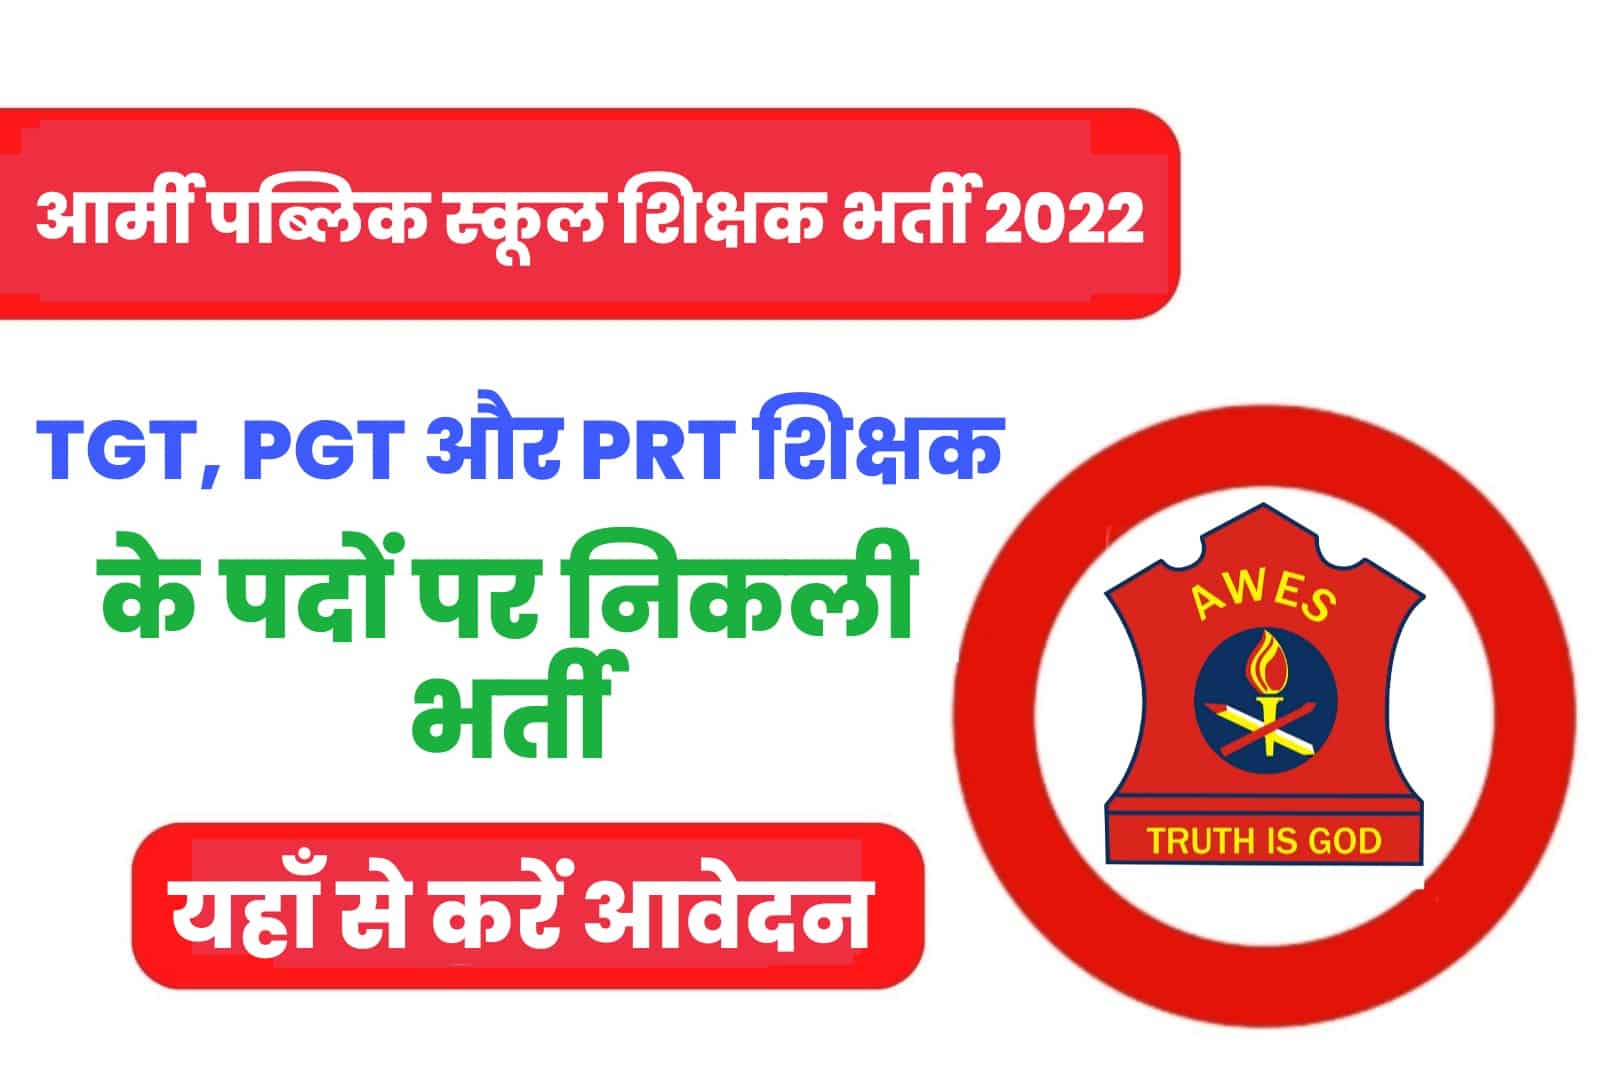 AWES Army School TGT PGT PRT Recruitment 2022 Online Form | आर्मी पब्लिक स्कूल शिक्षक भर्ती 2022